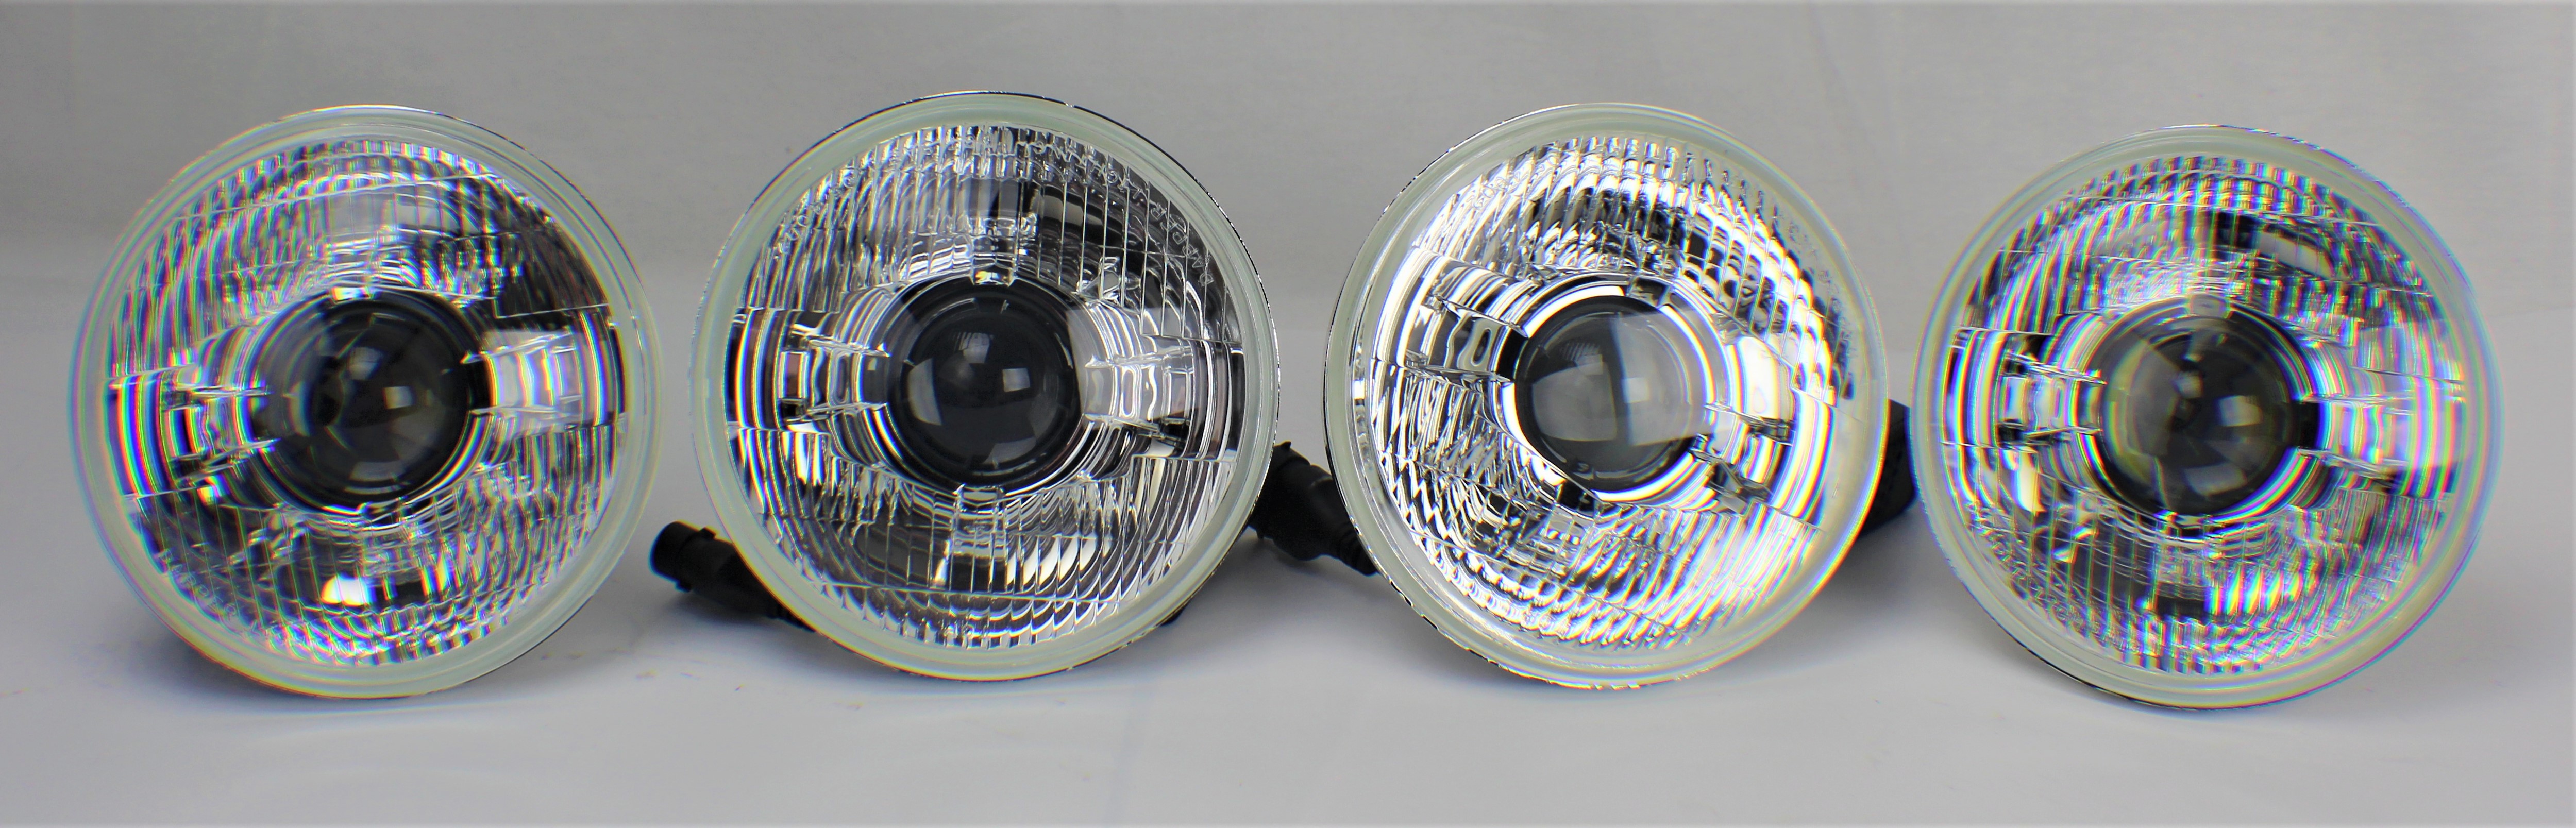 Industries • 5.75" H4 LED Headlight Conversion kit